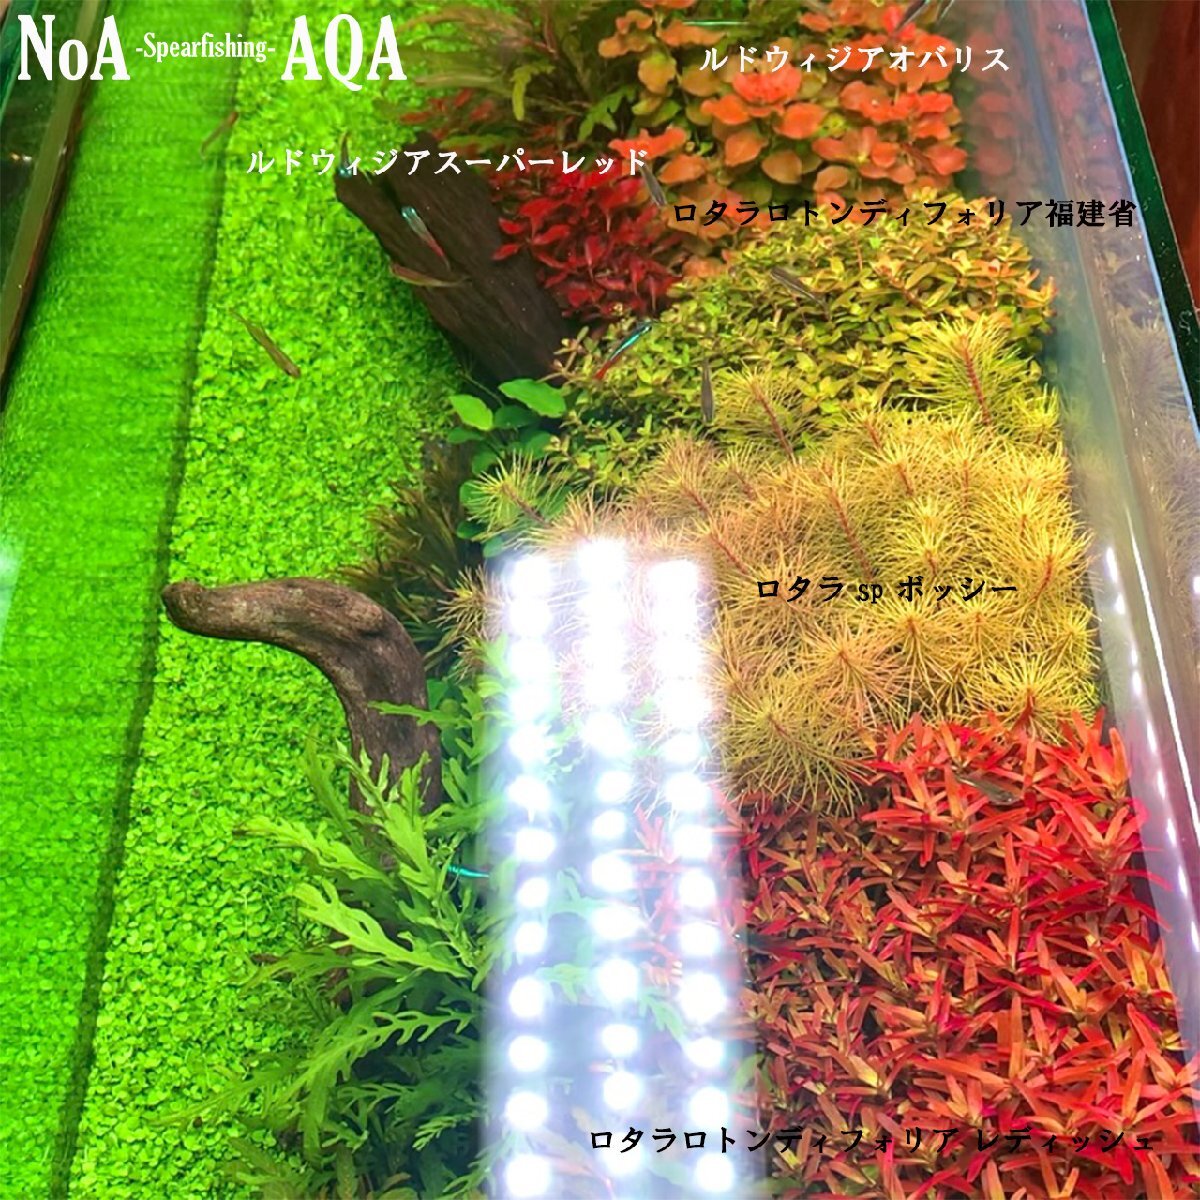  water plants underwater leaf less pesticide ro cod sp.bosi-5ps.@ aquarium aquarium ro cod Vietnam red ro cod wa Ricky long Gree f